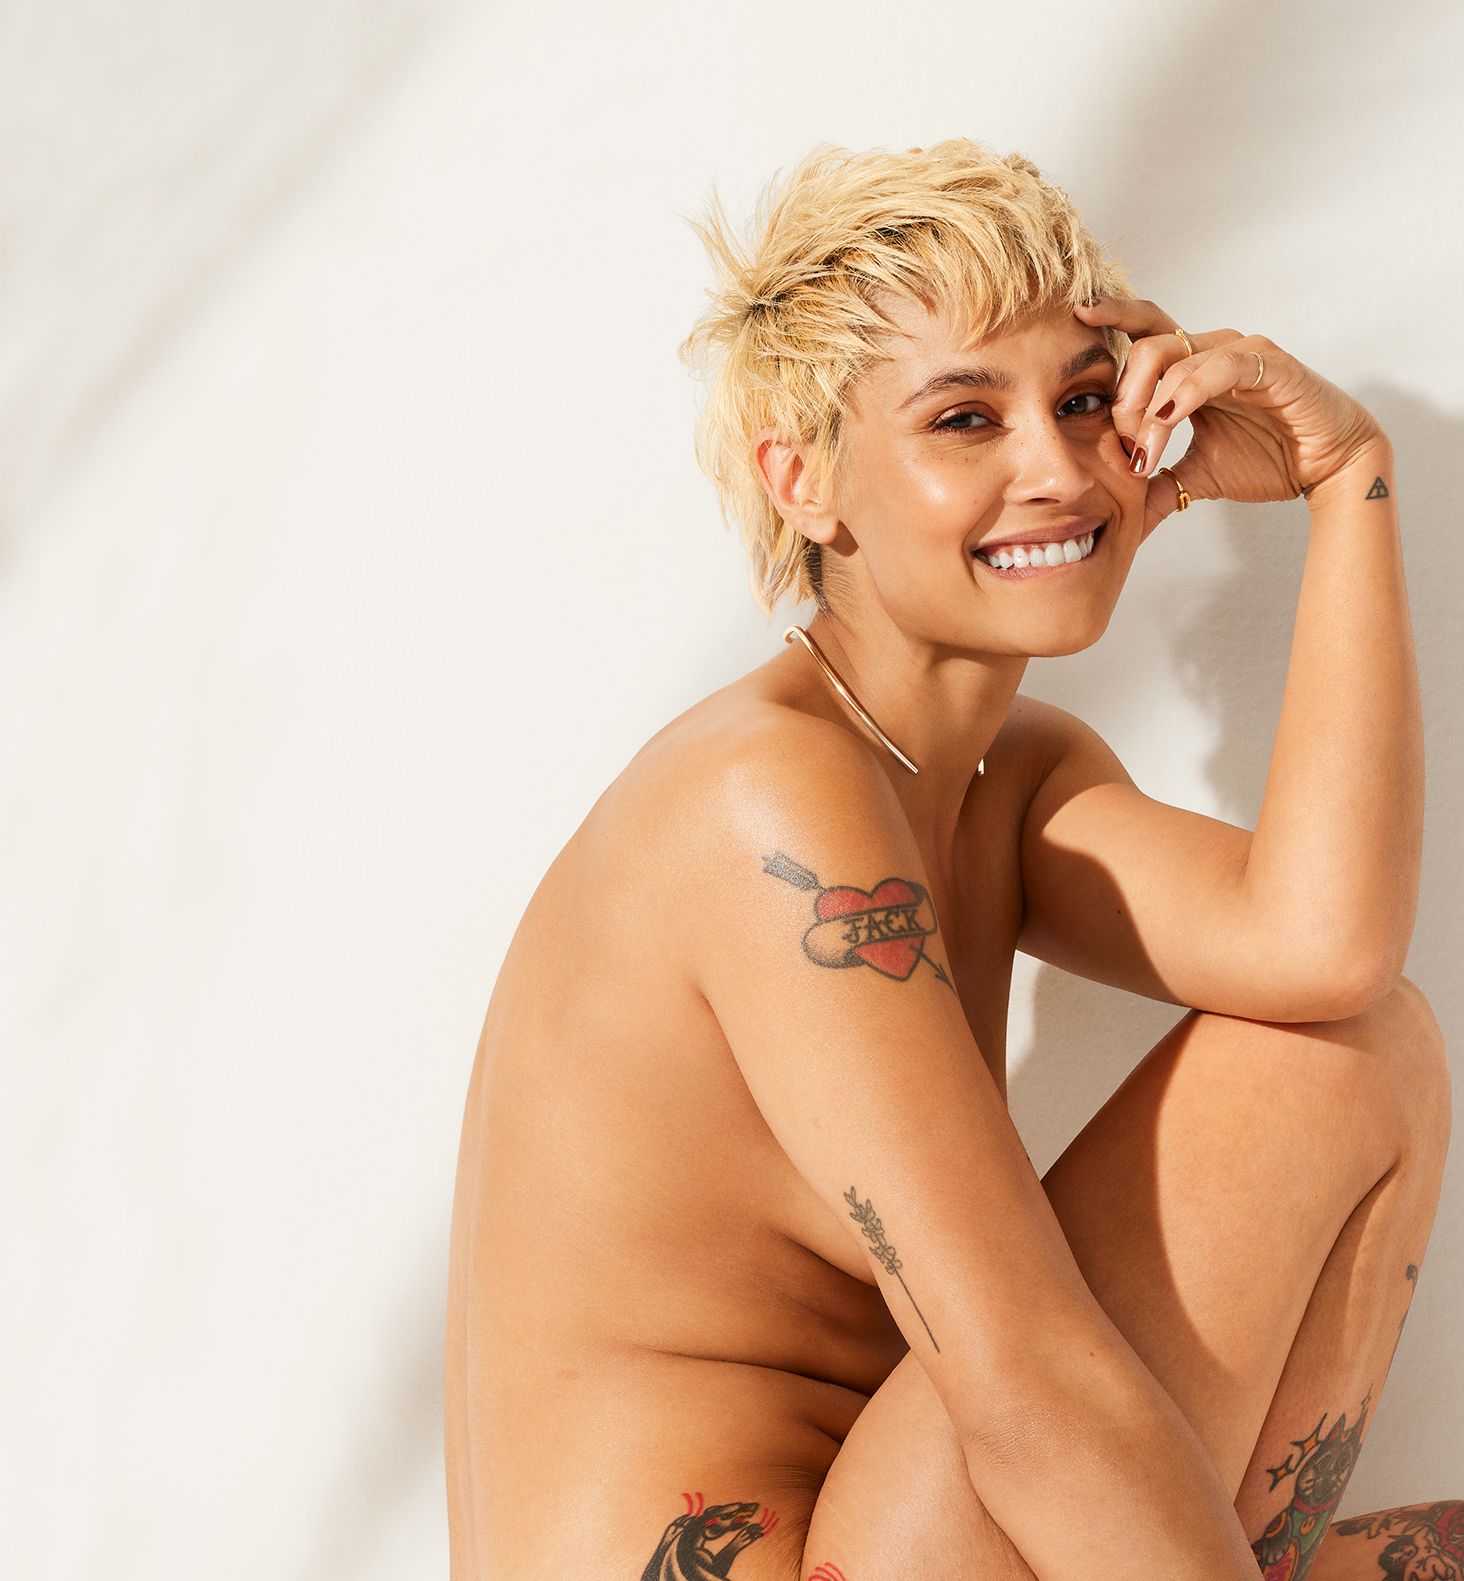 catherine ganzon share nude female tattoo models photos